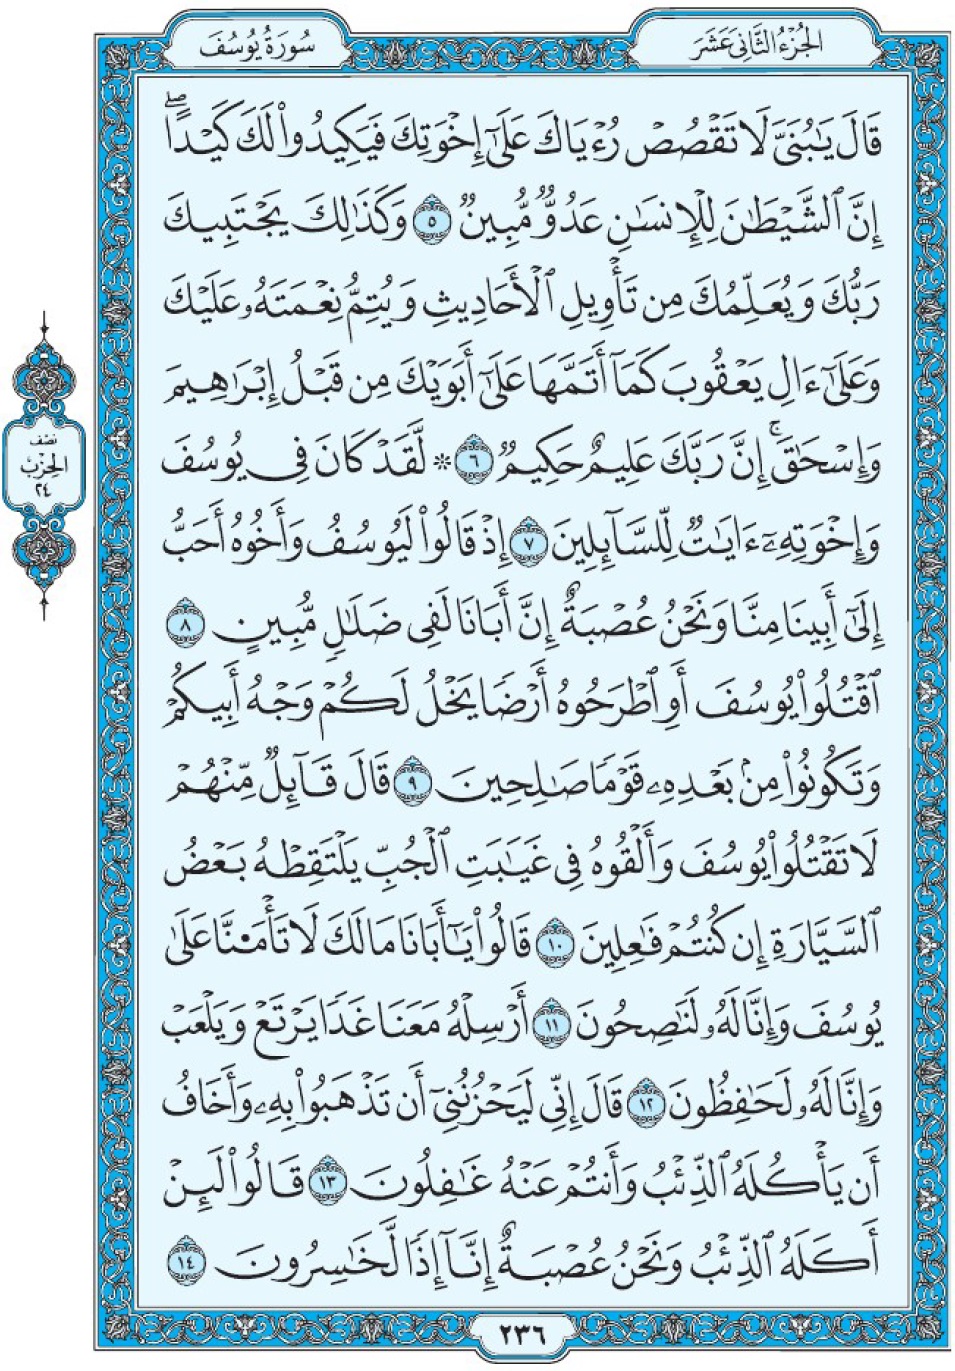 Коран Мединский мусхаф страница 236, Юсуф, аят 5-14